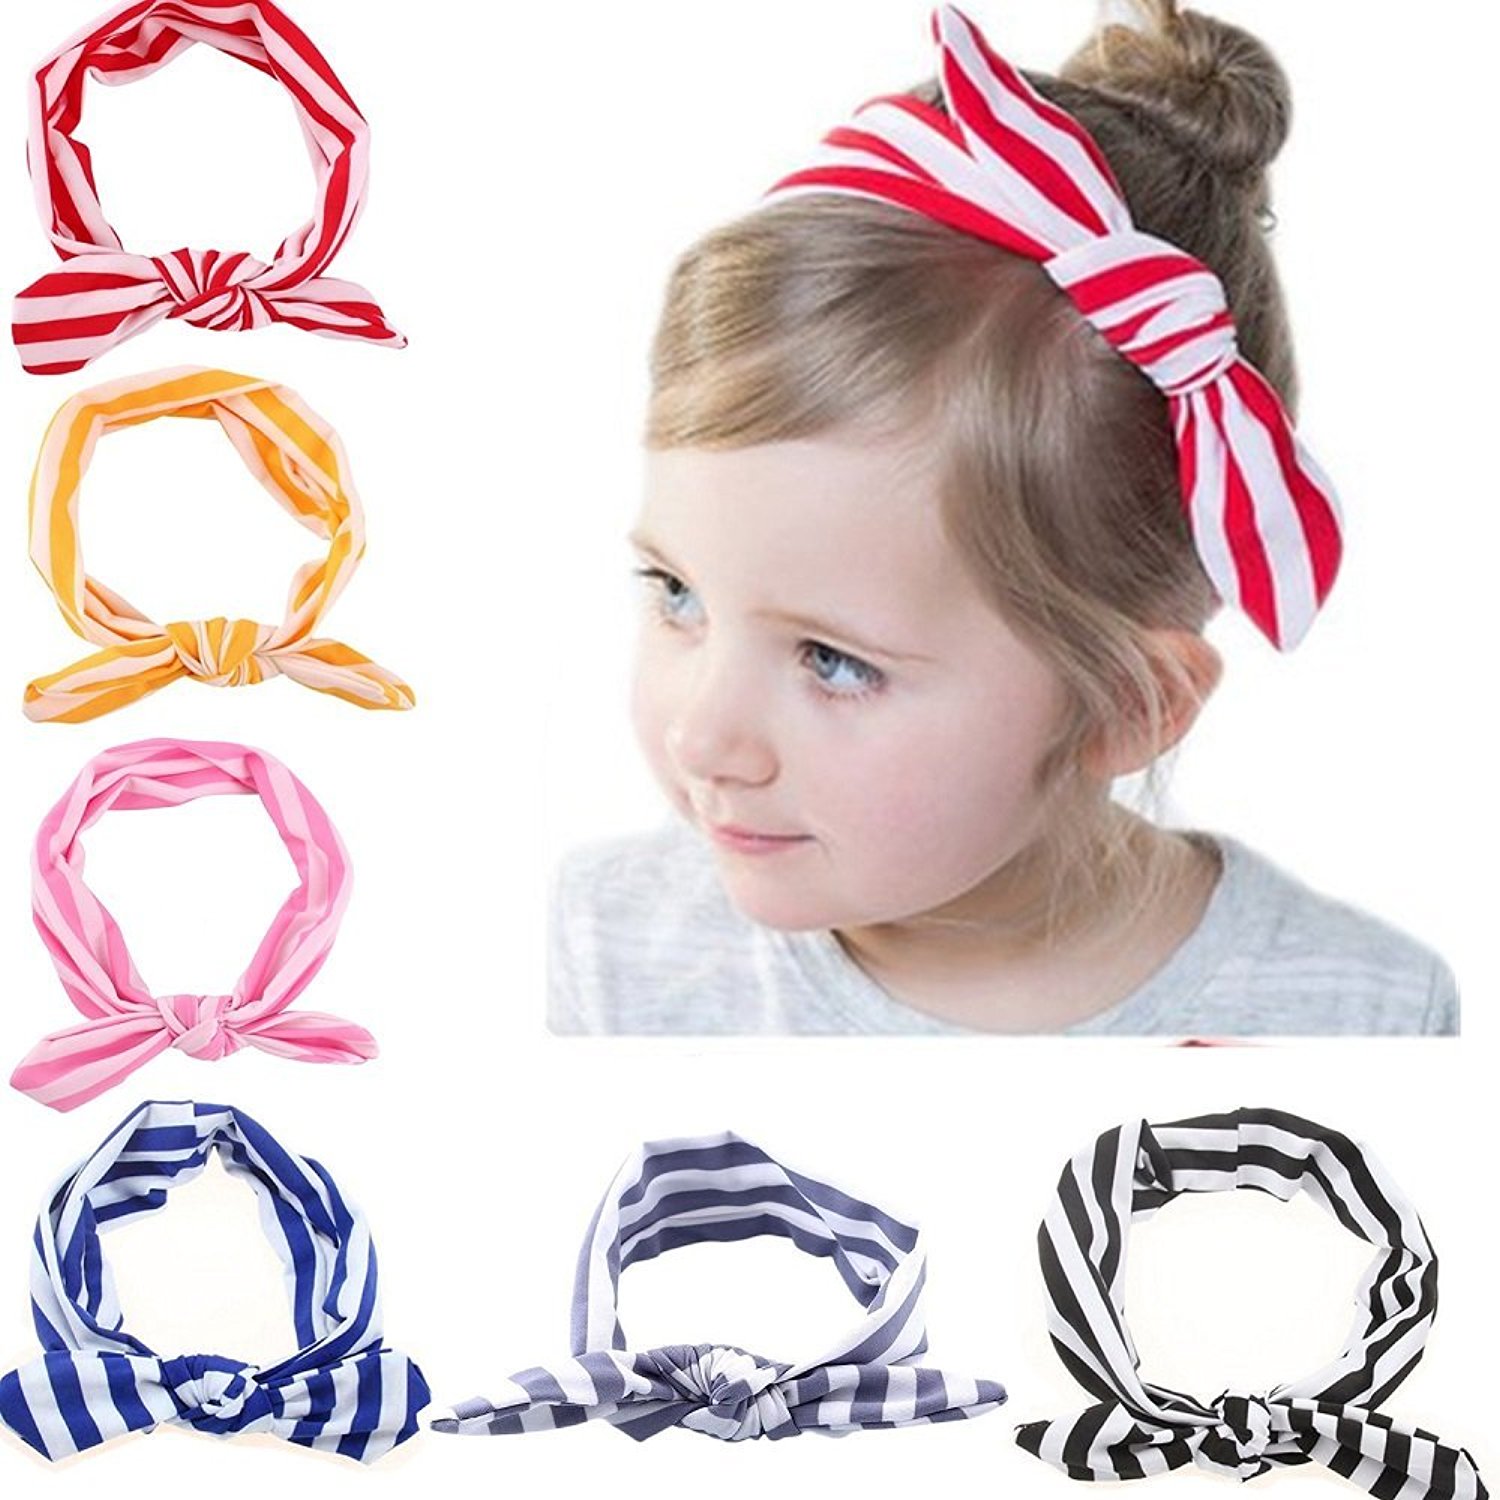 Ahyuan Baby Girls Toddler Headbands Rabbit Ear Headband Stripe Hairband 6pcs